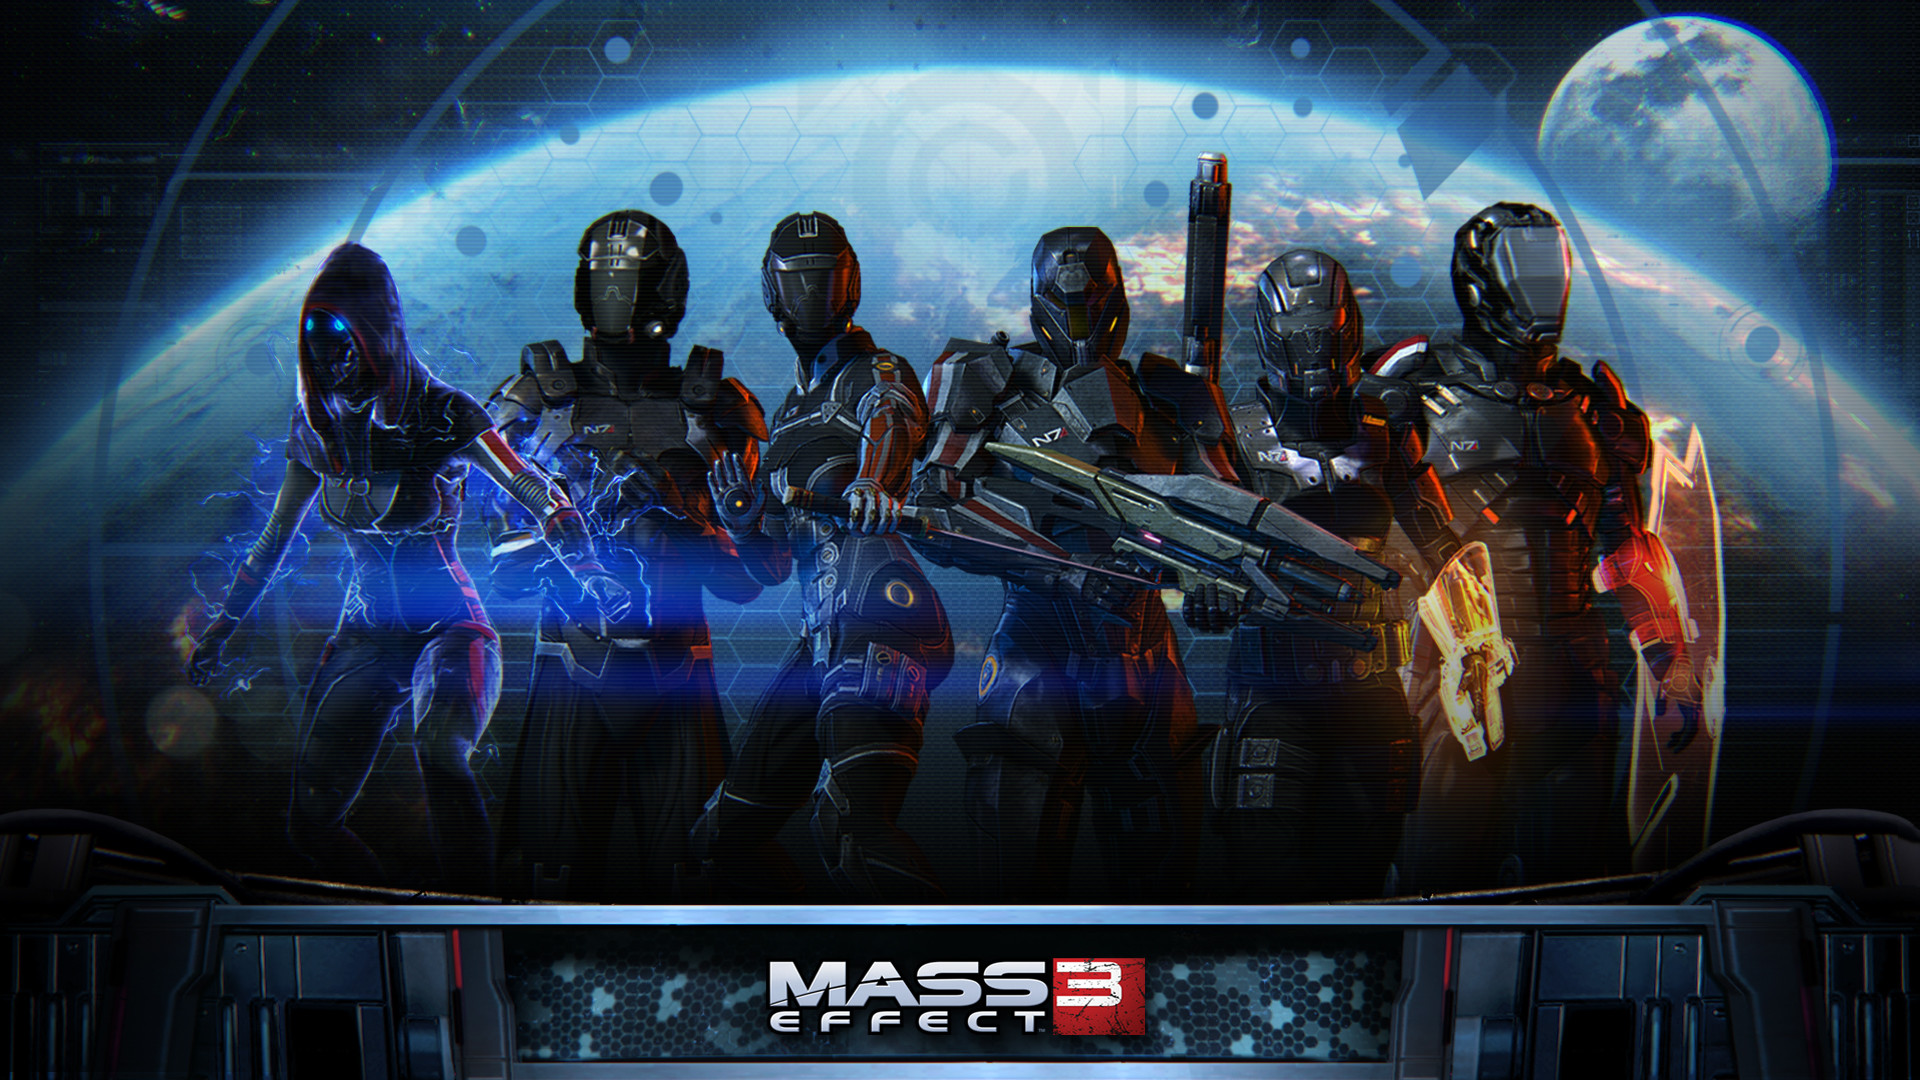 1920x1080 Mass Effect 3 HD Wallpaper | Background Image |  | ID:371469 -  Wallpaper Abyss